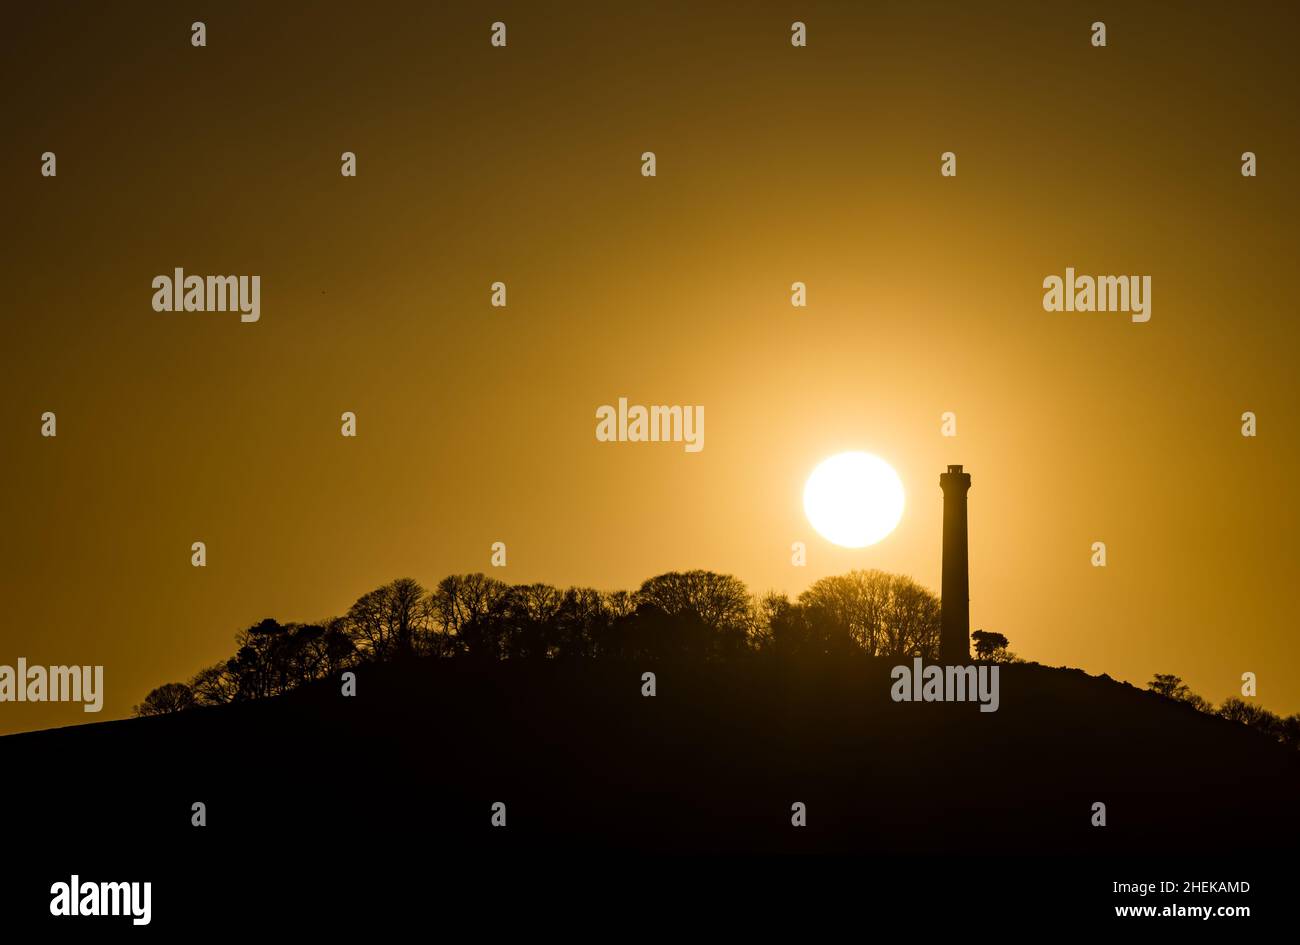 Puesta de sol en el claro cielo naranja con la silueta de la torre del Monumento a la cima de la colina de Hopetoun, East Lothian, Escocia, Reino Unido Foto de stock